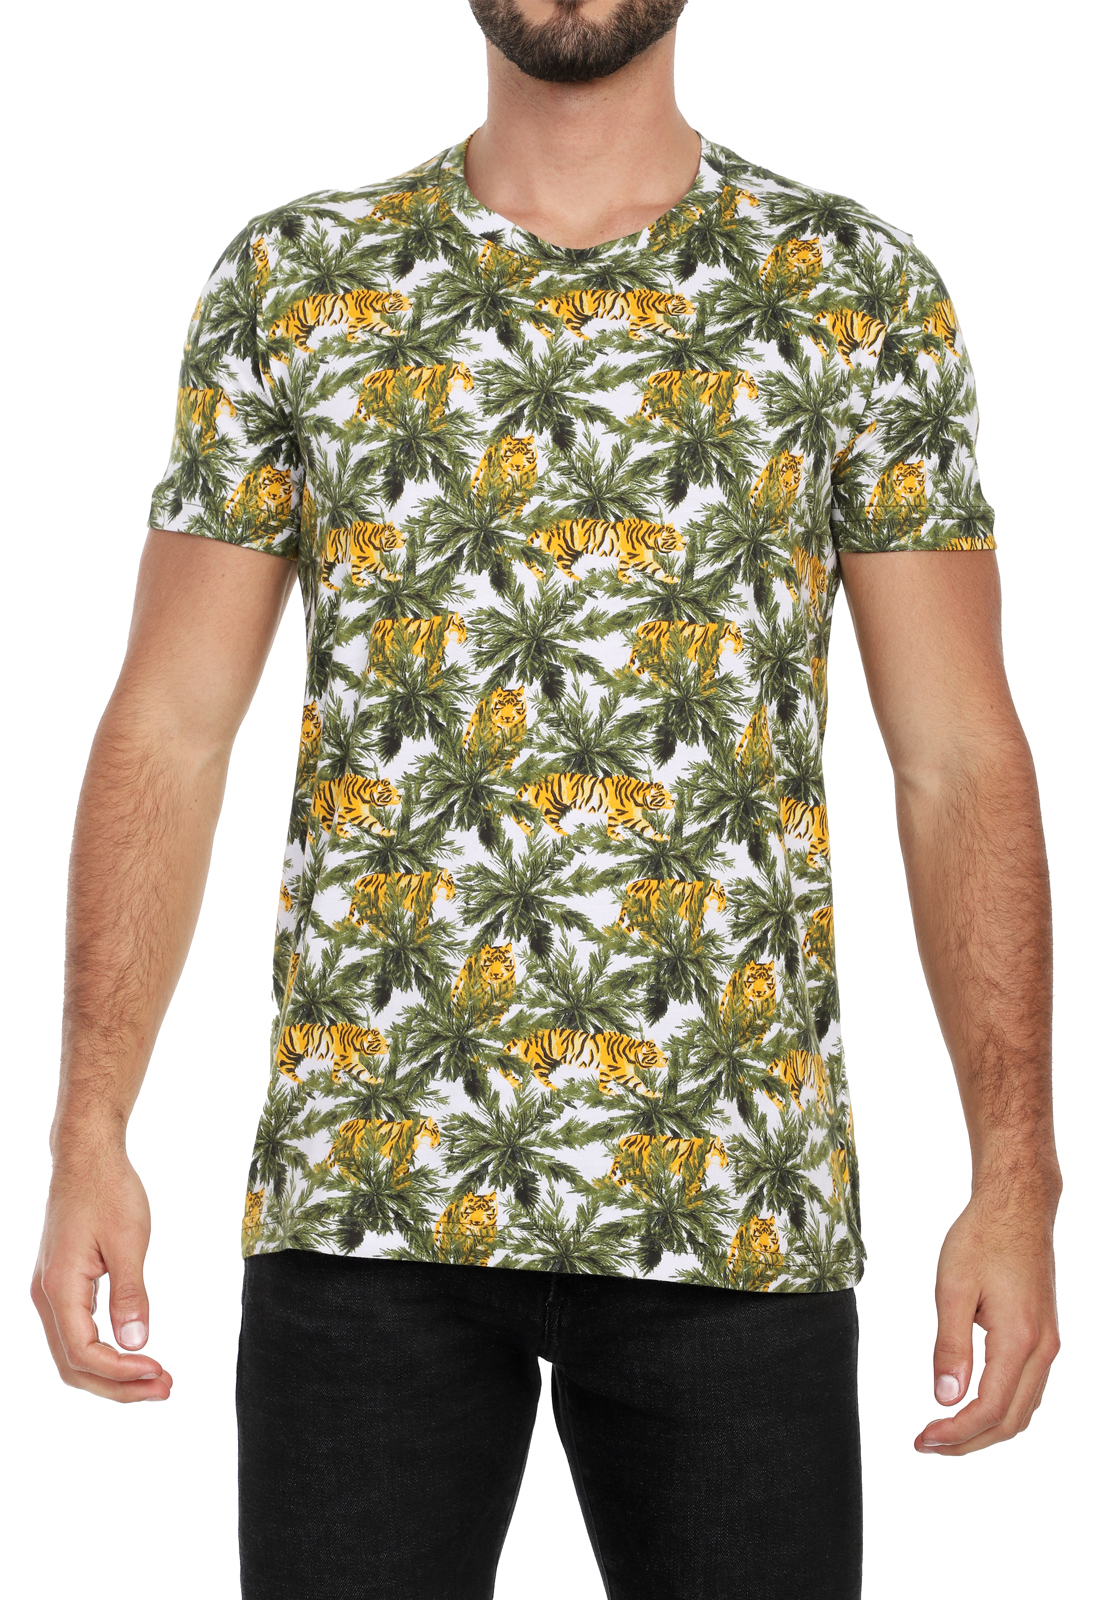 T-shirt para hombre sublimada jungle verde, blanca, amarillo